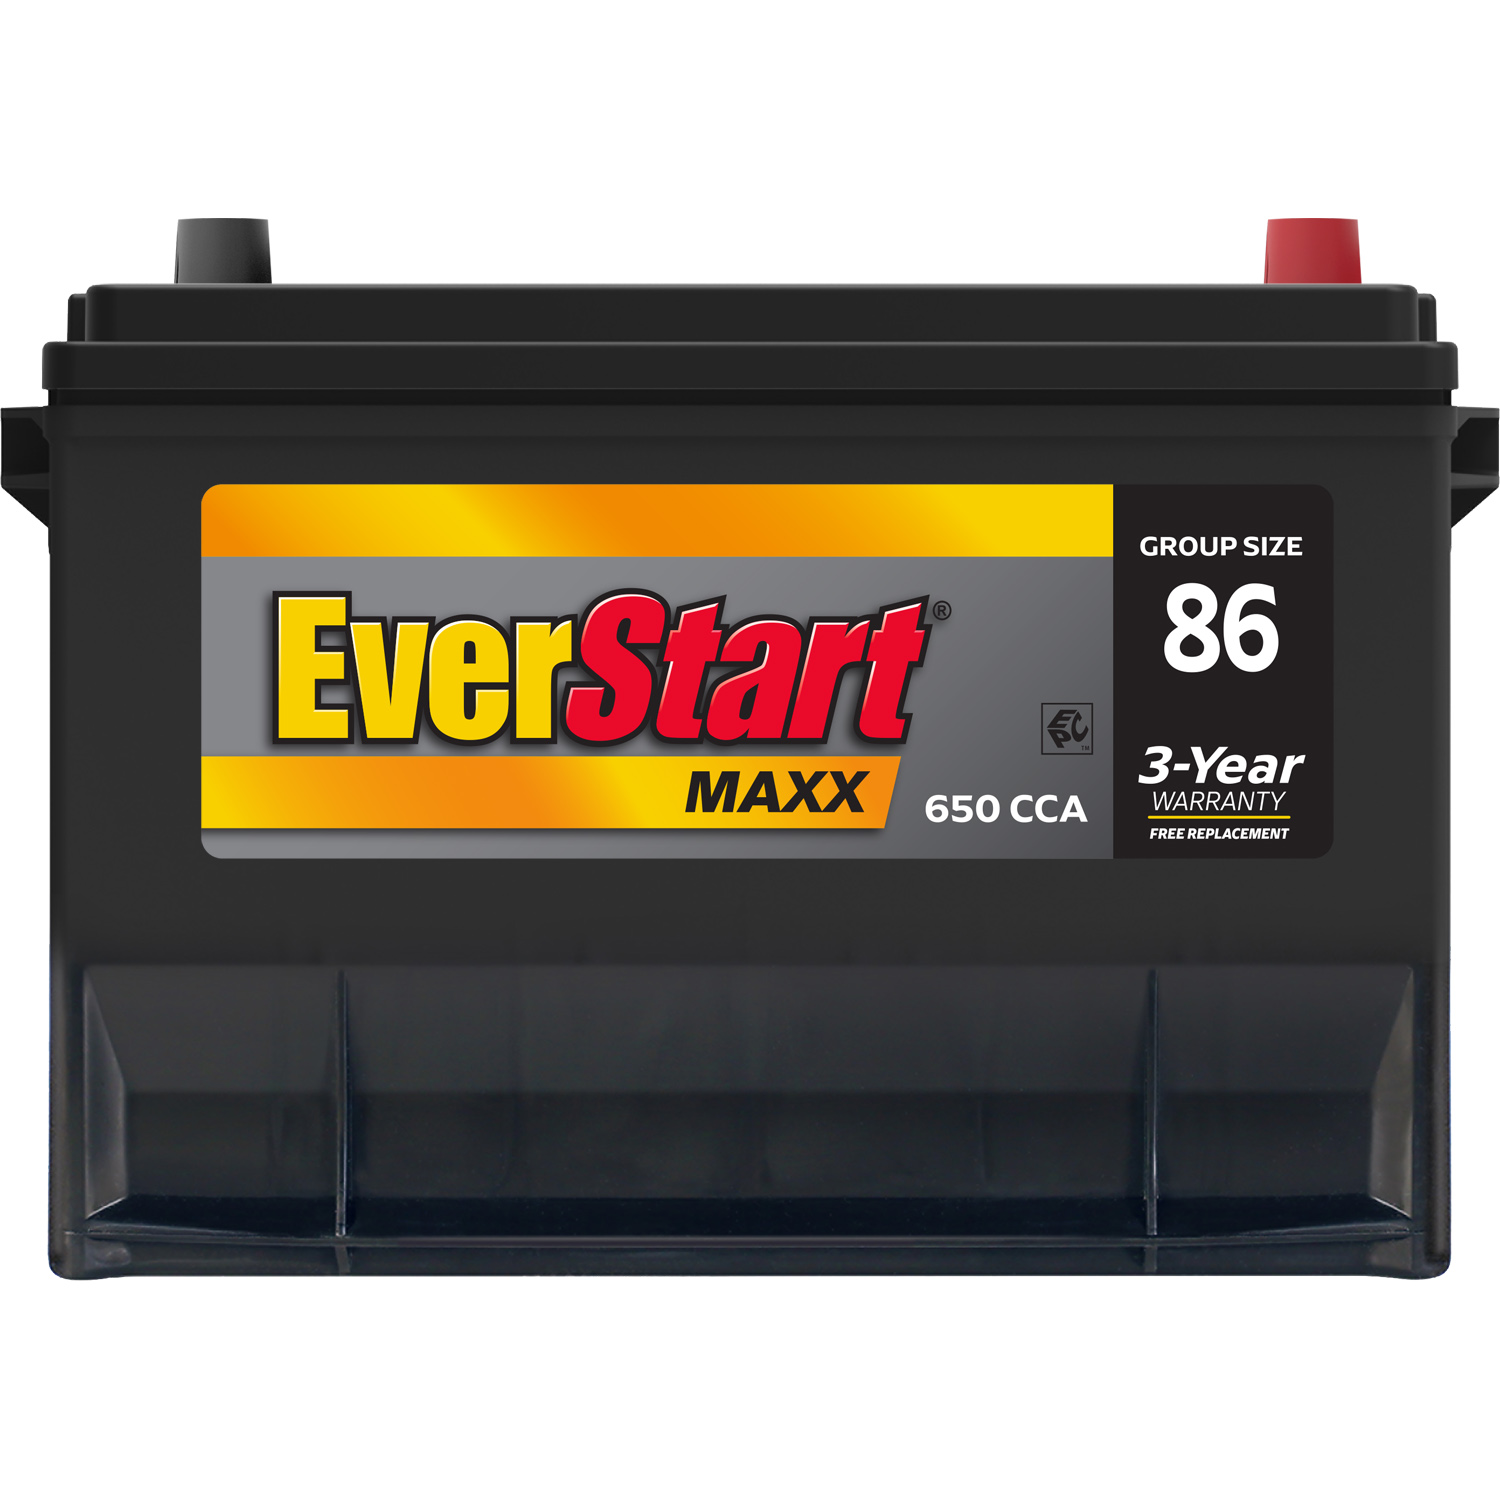 EverStart Maxx Lead Acid Automotive Battery, Group Size 86 12 Volt, 650 CCA - image 3 of 7